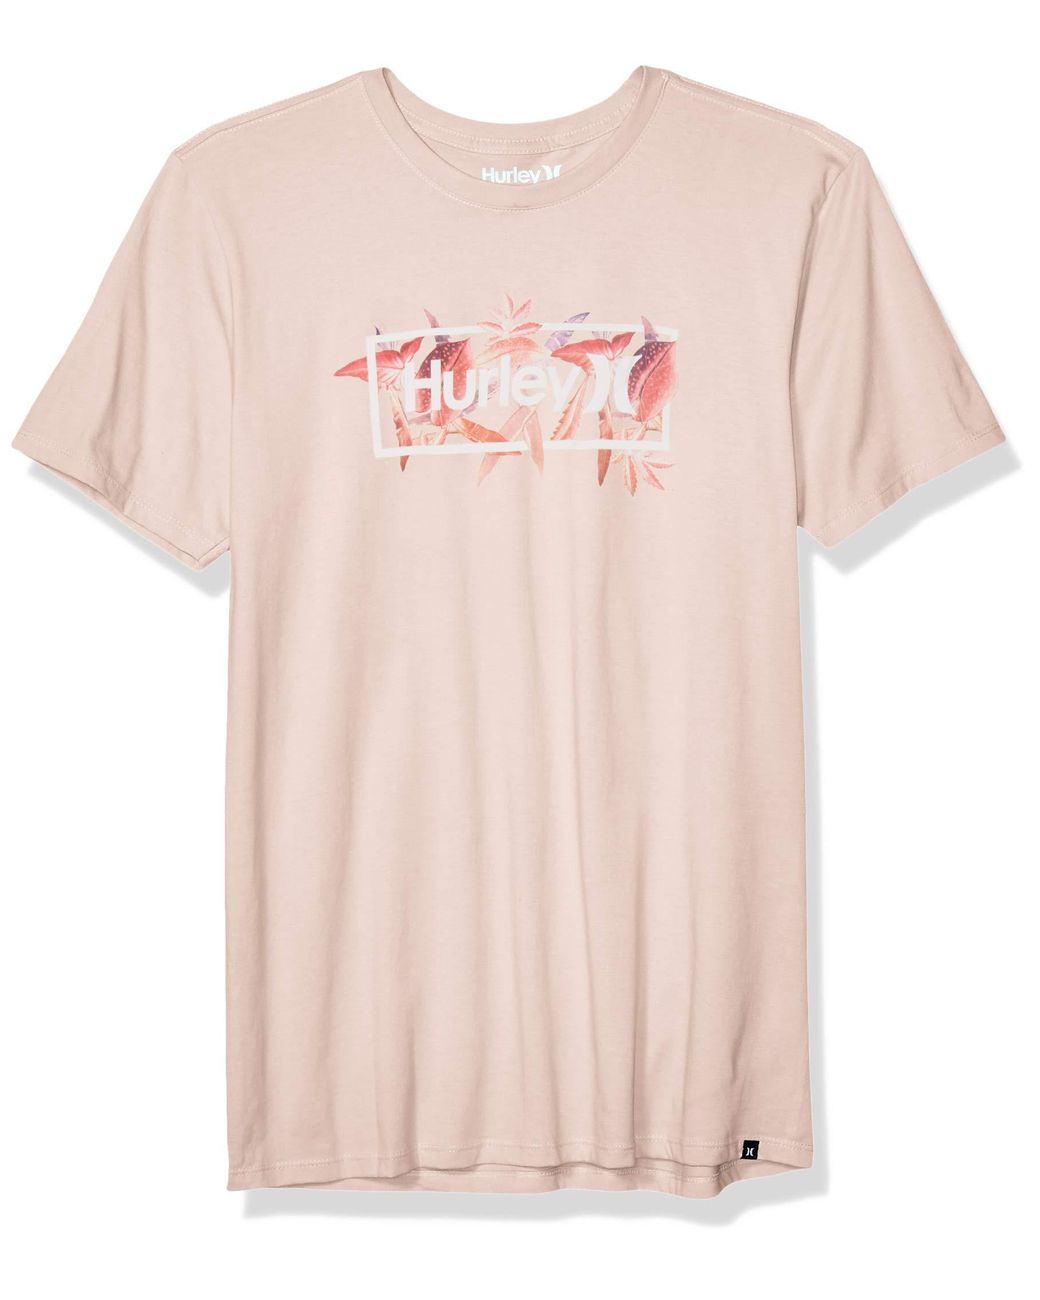 Hurley Premium Botantical Short Sleeve Tshirt in Pink for Men - Save 19 ...